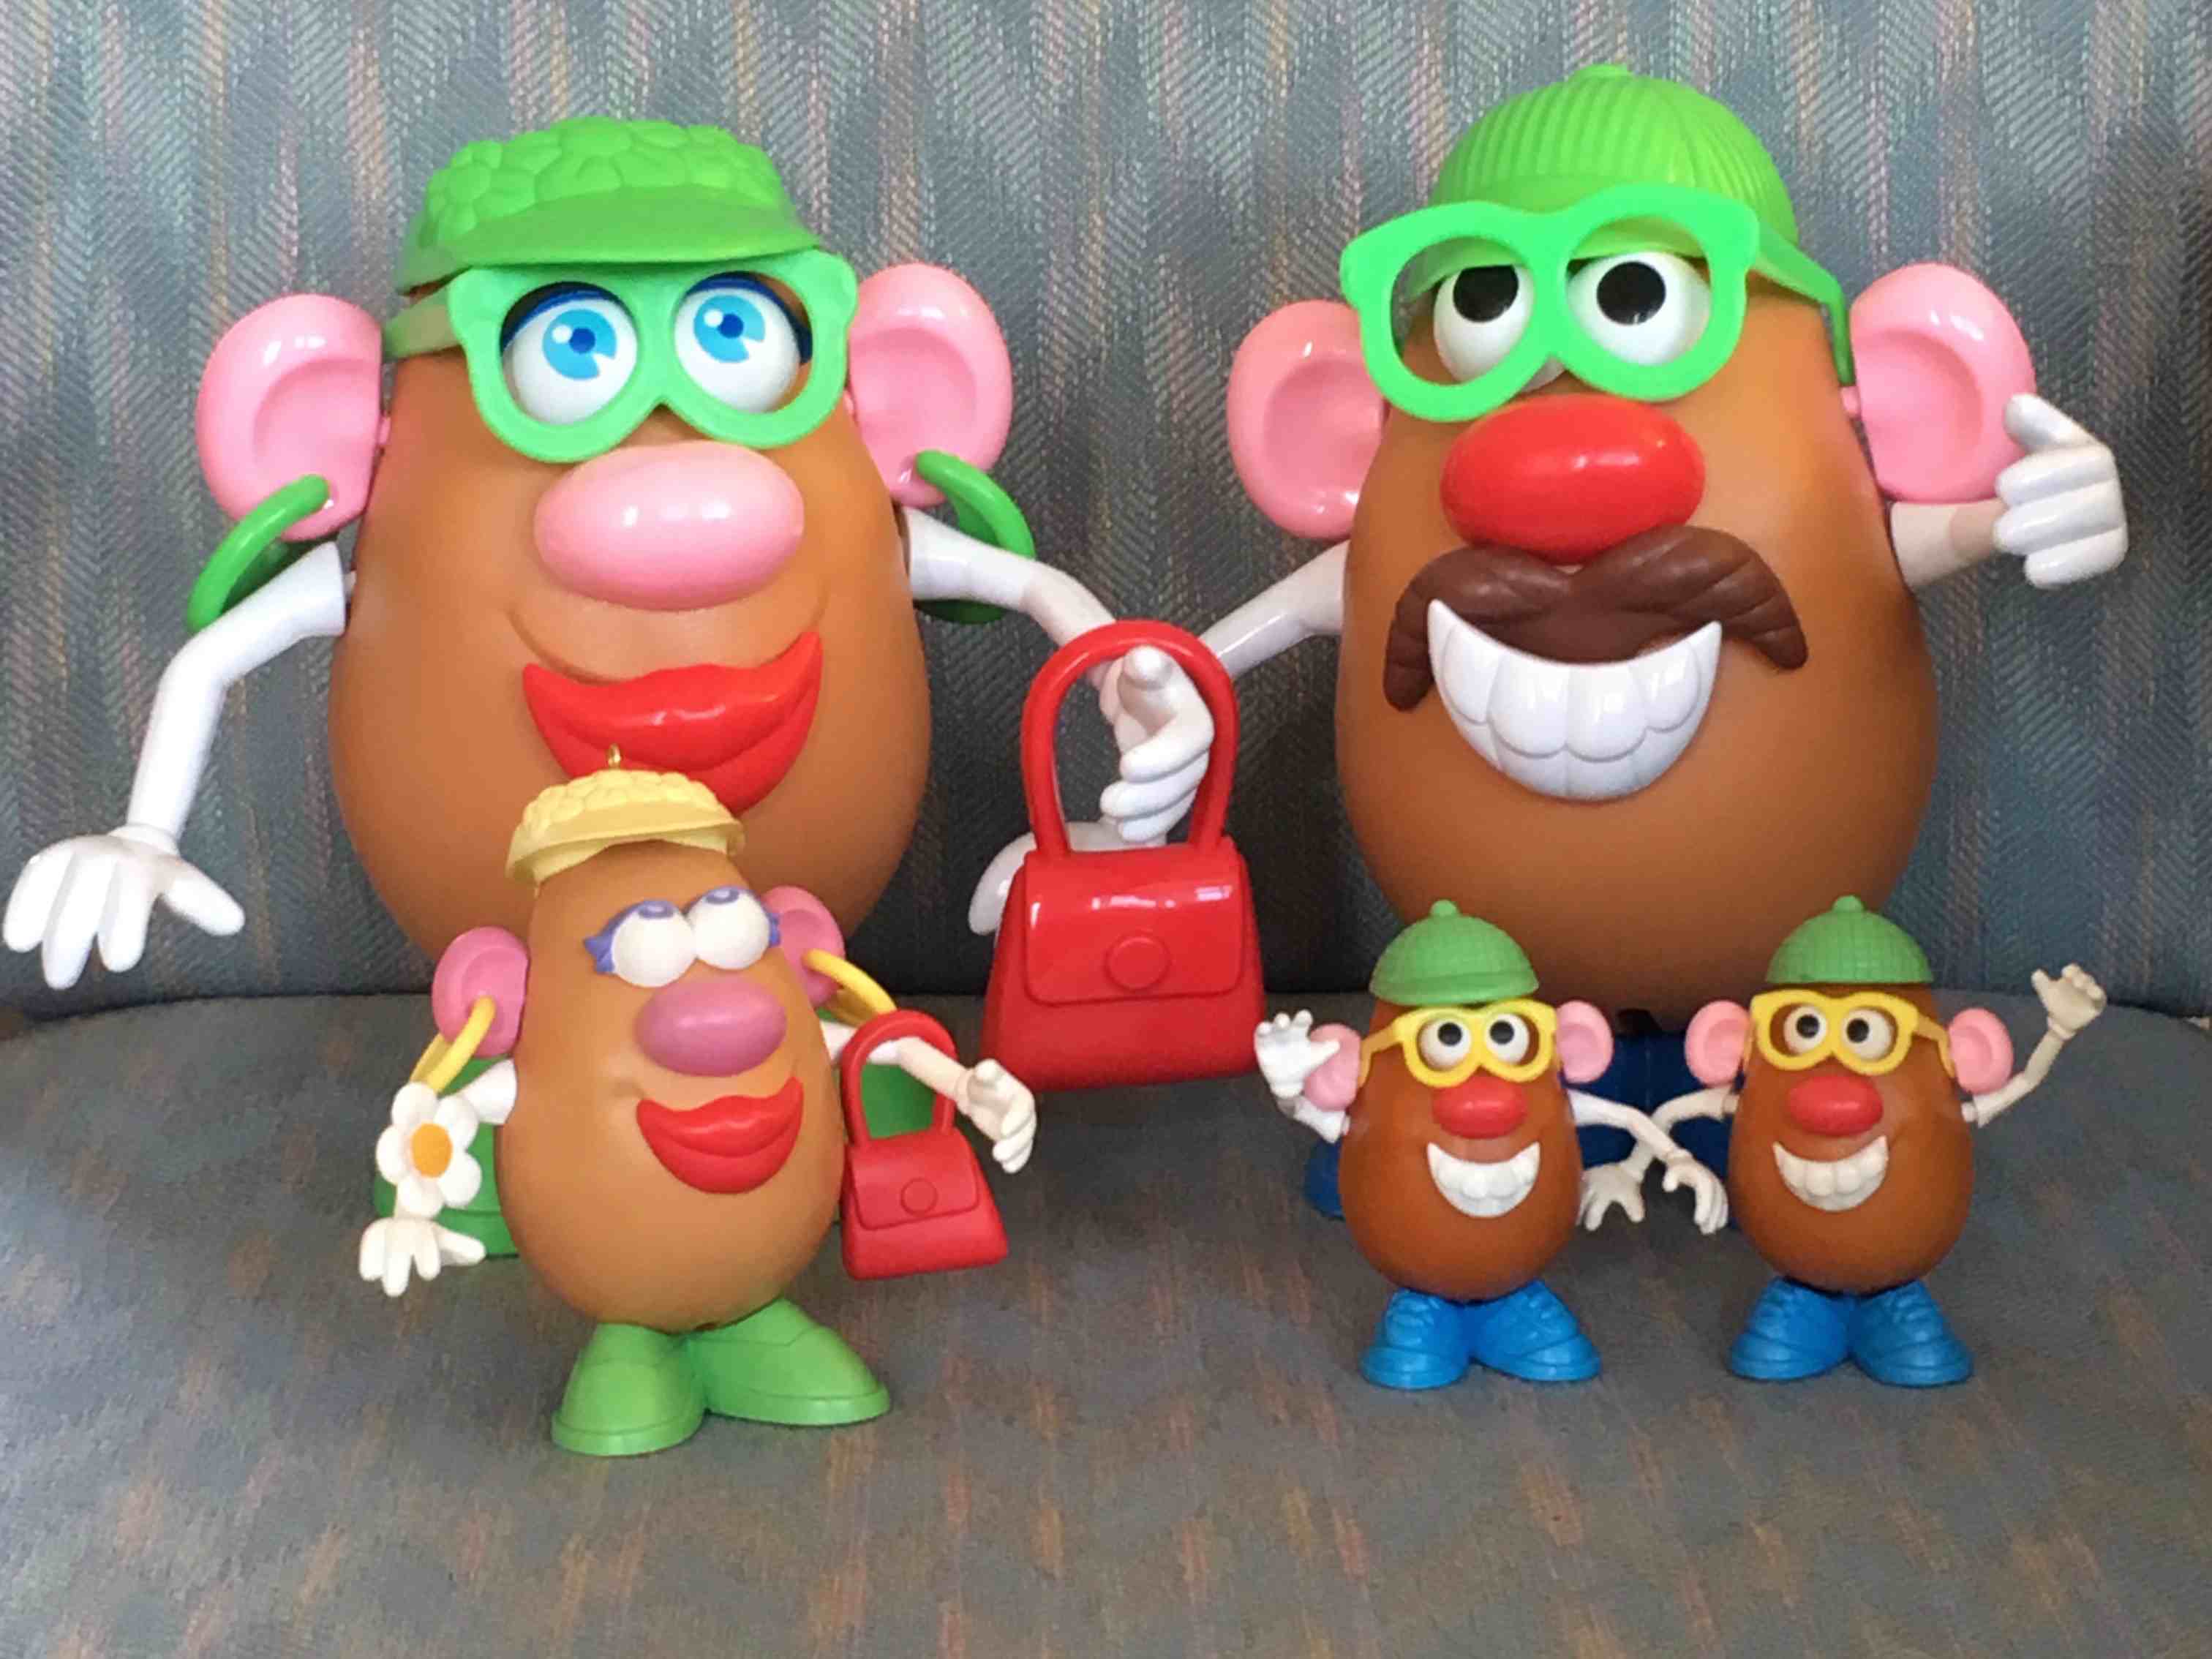 mr potato head and family